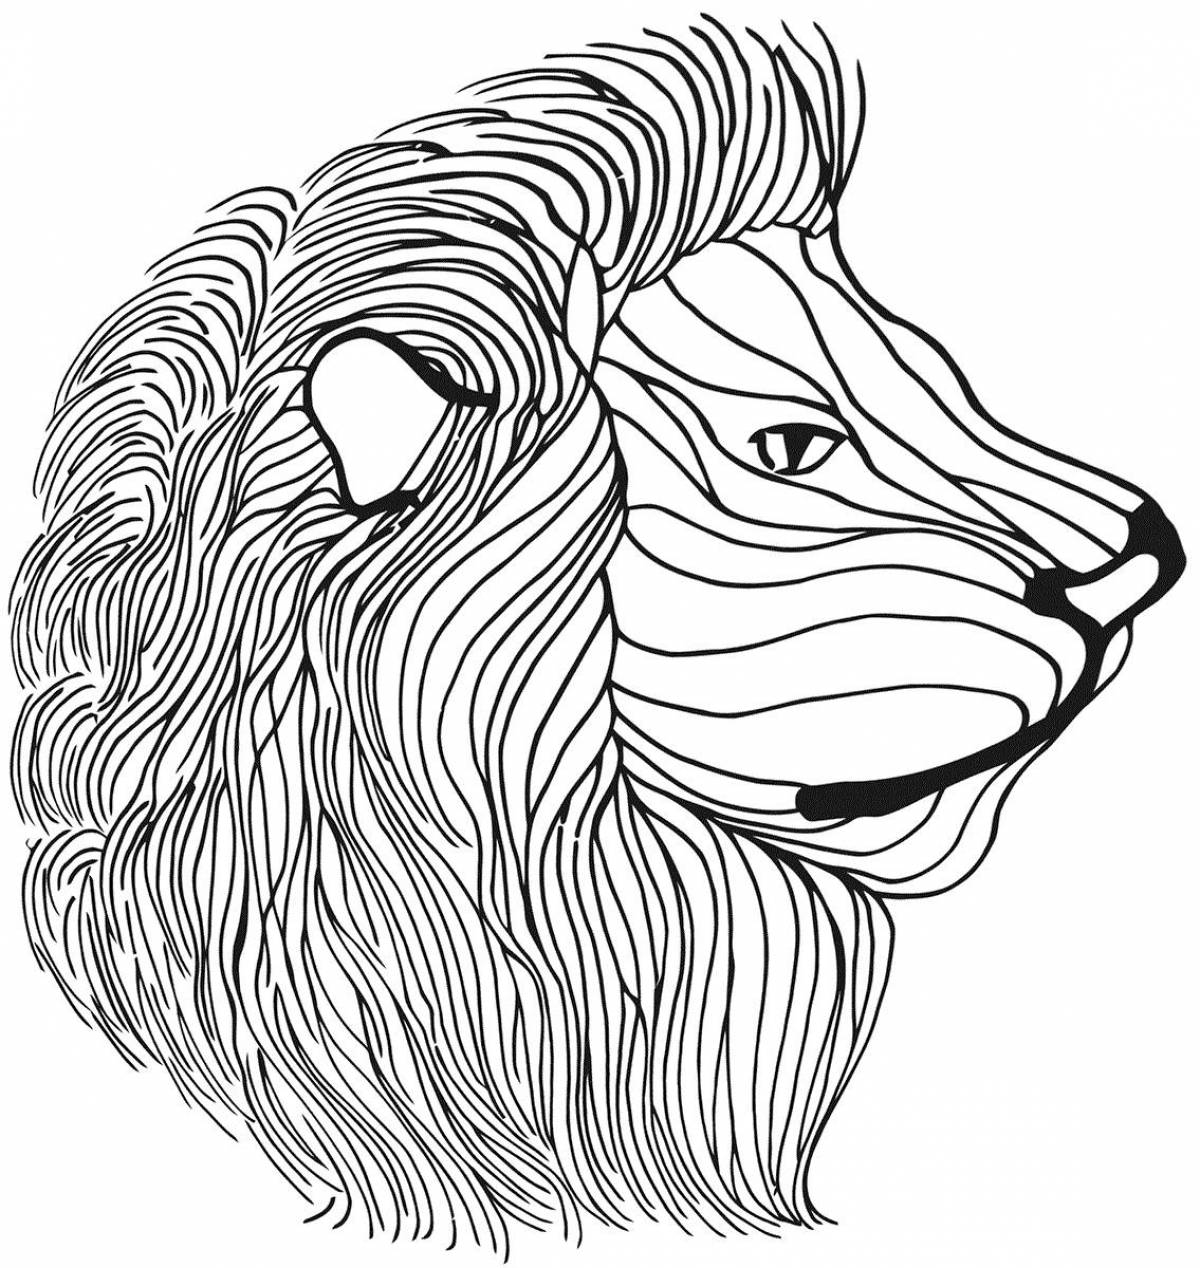 Lion head drawing